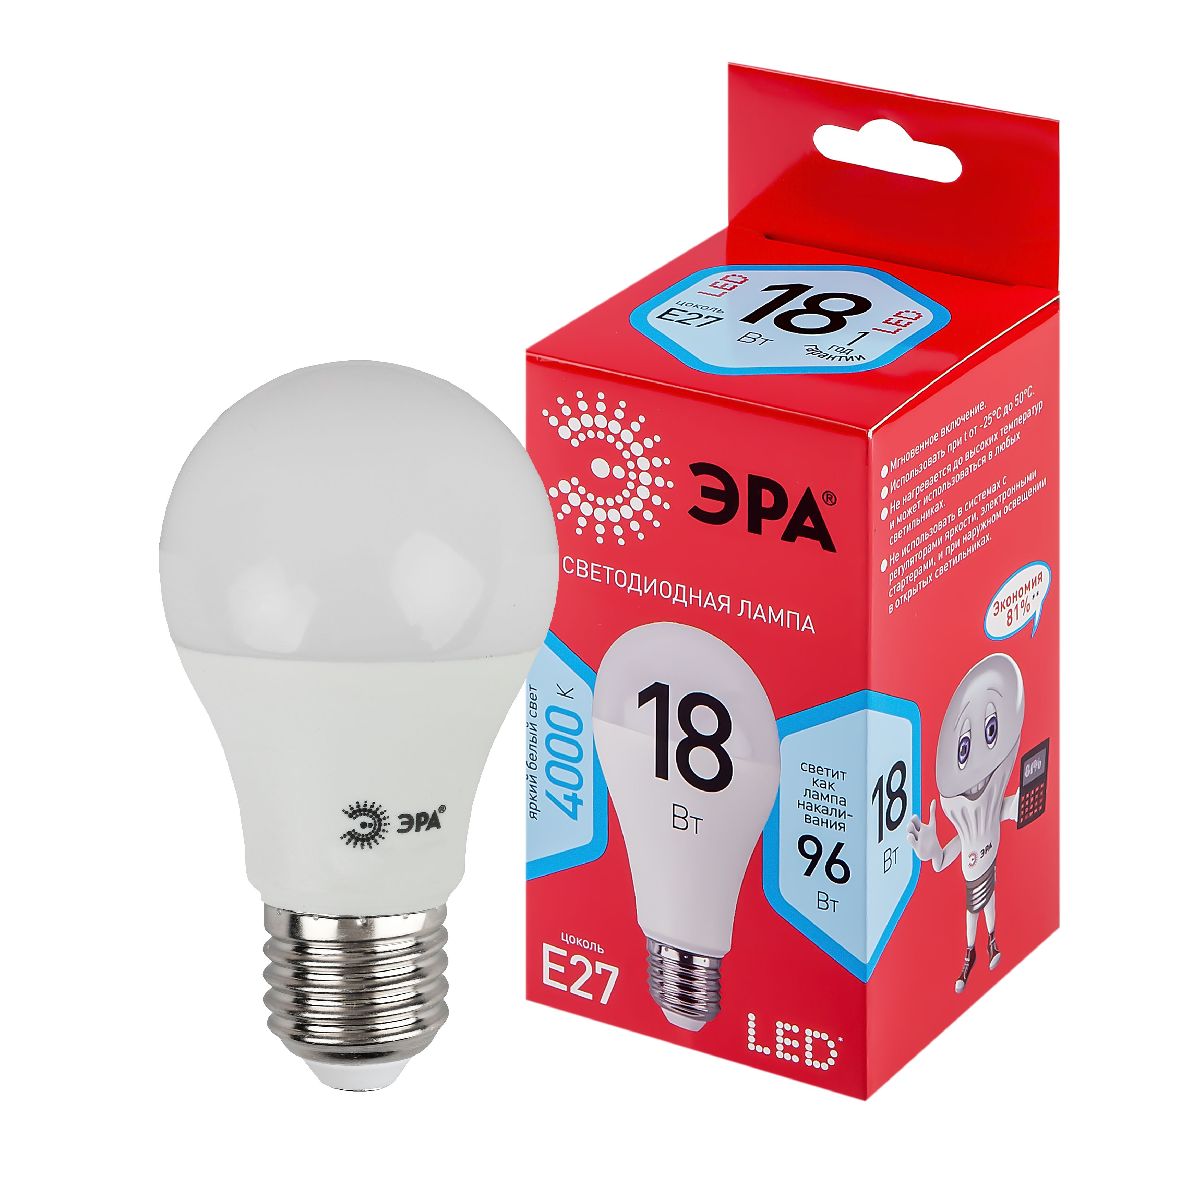 Лампа светодиодная Эра E27 18W 4000K LED A65-18W-840-E27 R Б0052381